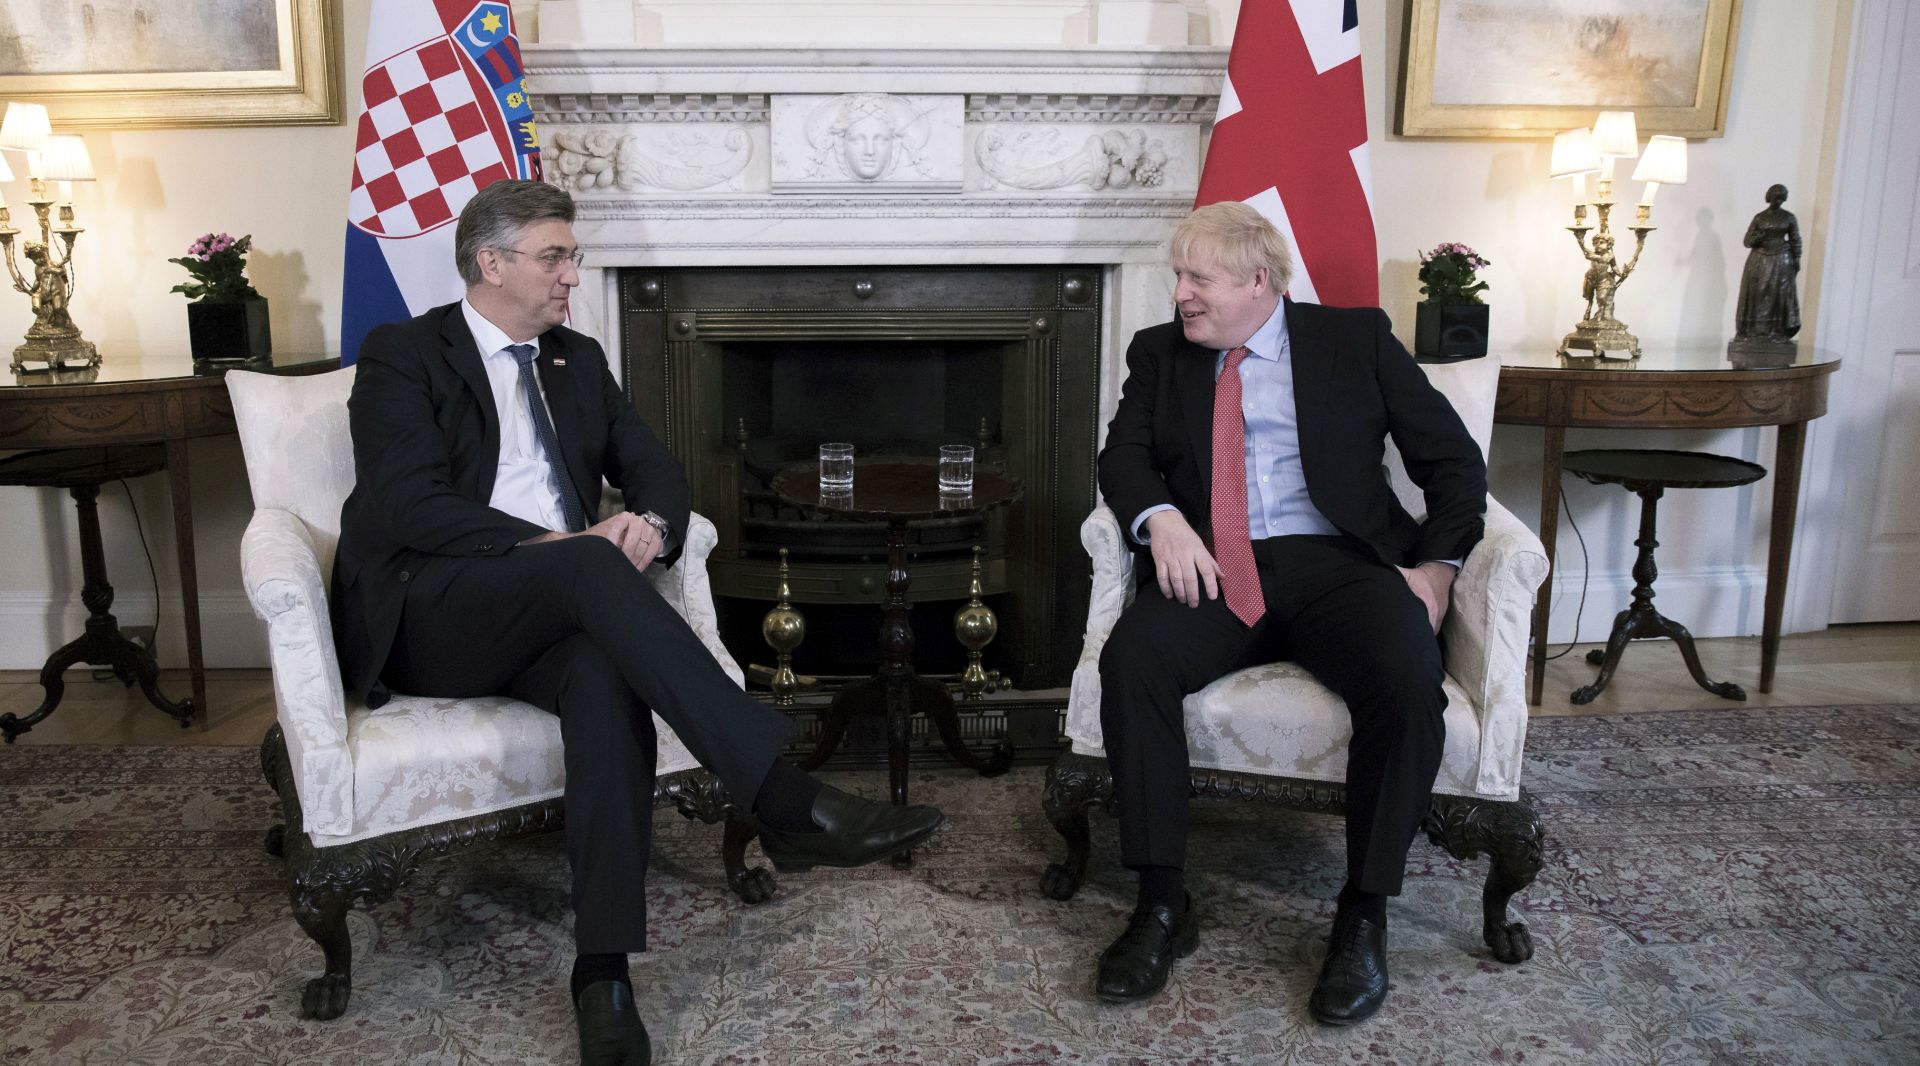 epa08244003 British premier Boris Johnson (R) speaks with Croatia's prime minister Andrej Plenkovic during their bilateral meeting at number 10 Downing Street in London, Britain, 24 February 2020.  EPA/Jason Alden / POOL